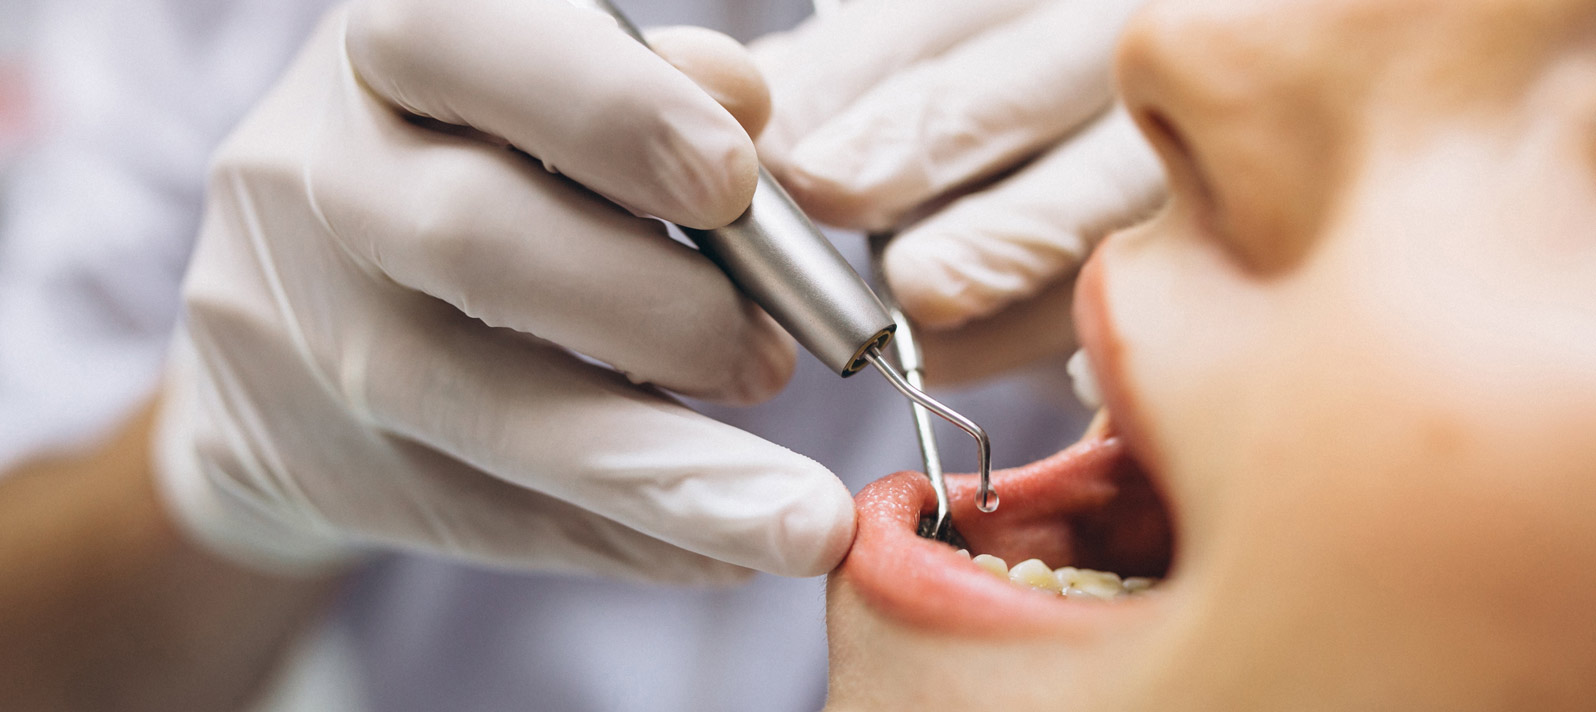 En Dental Roca realizamos cirugías para implantes dentales